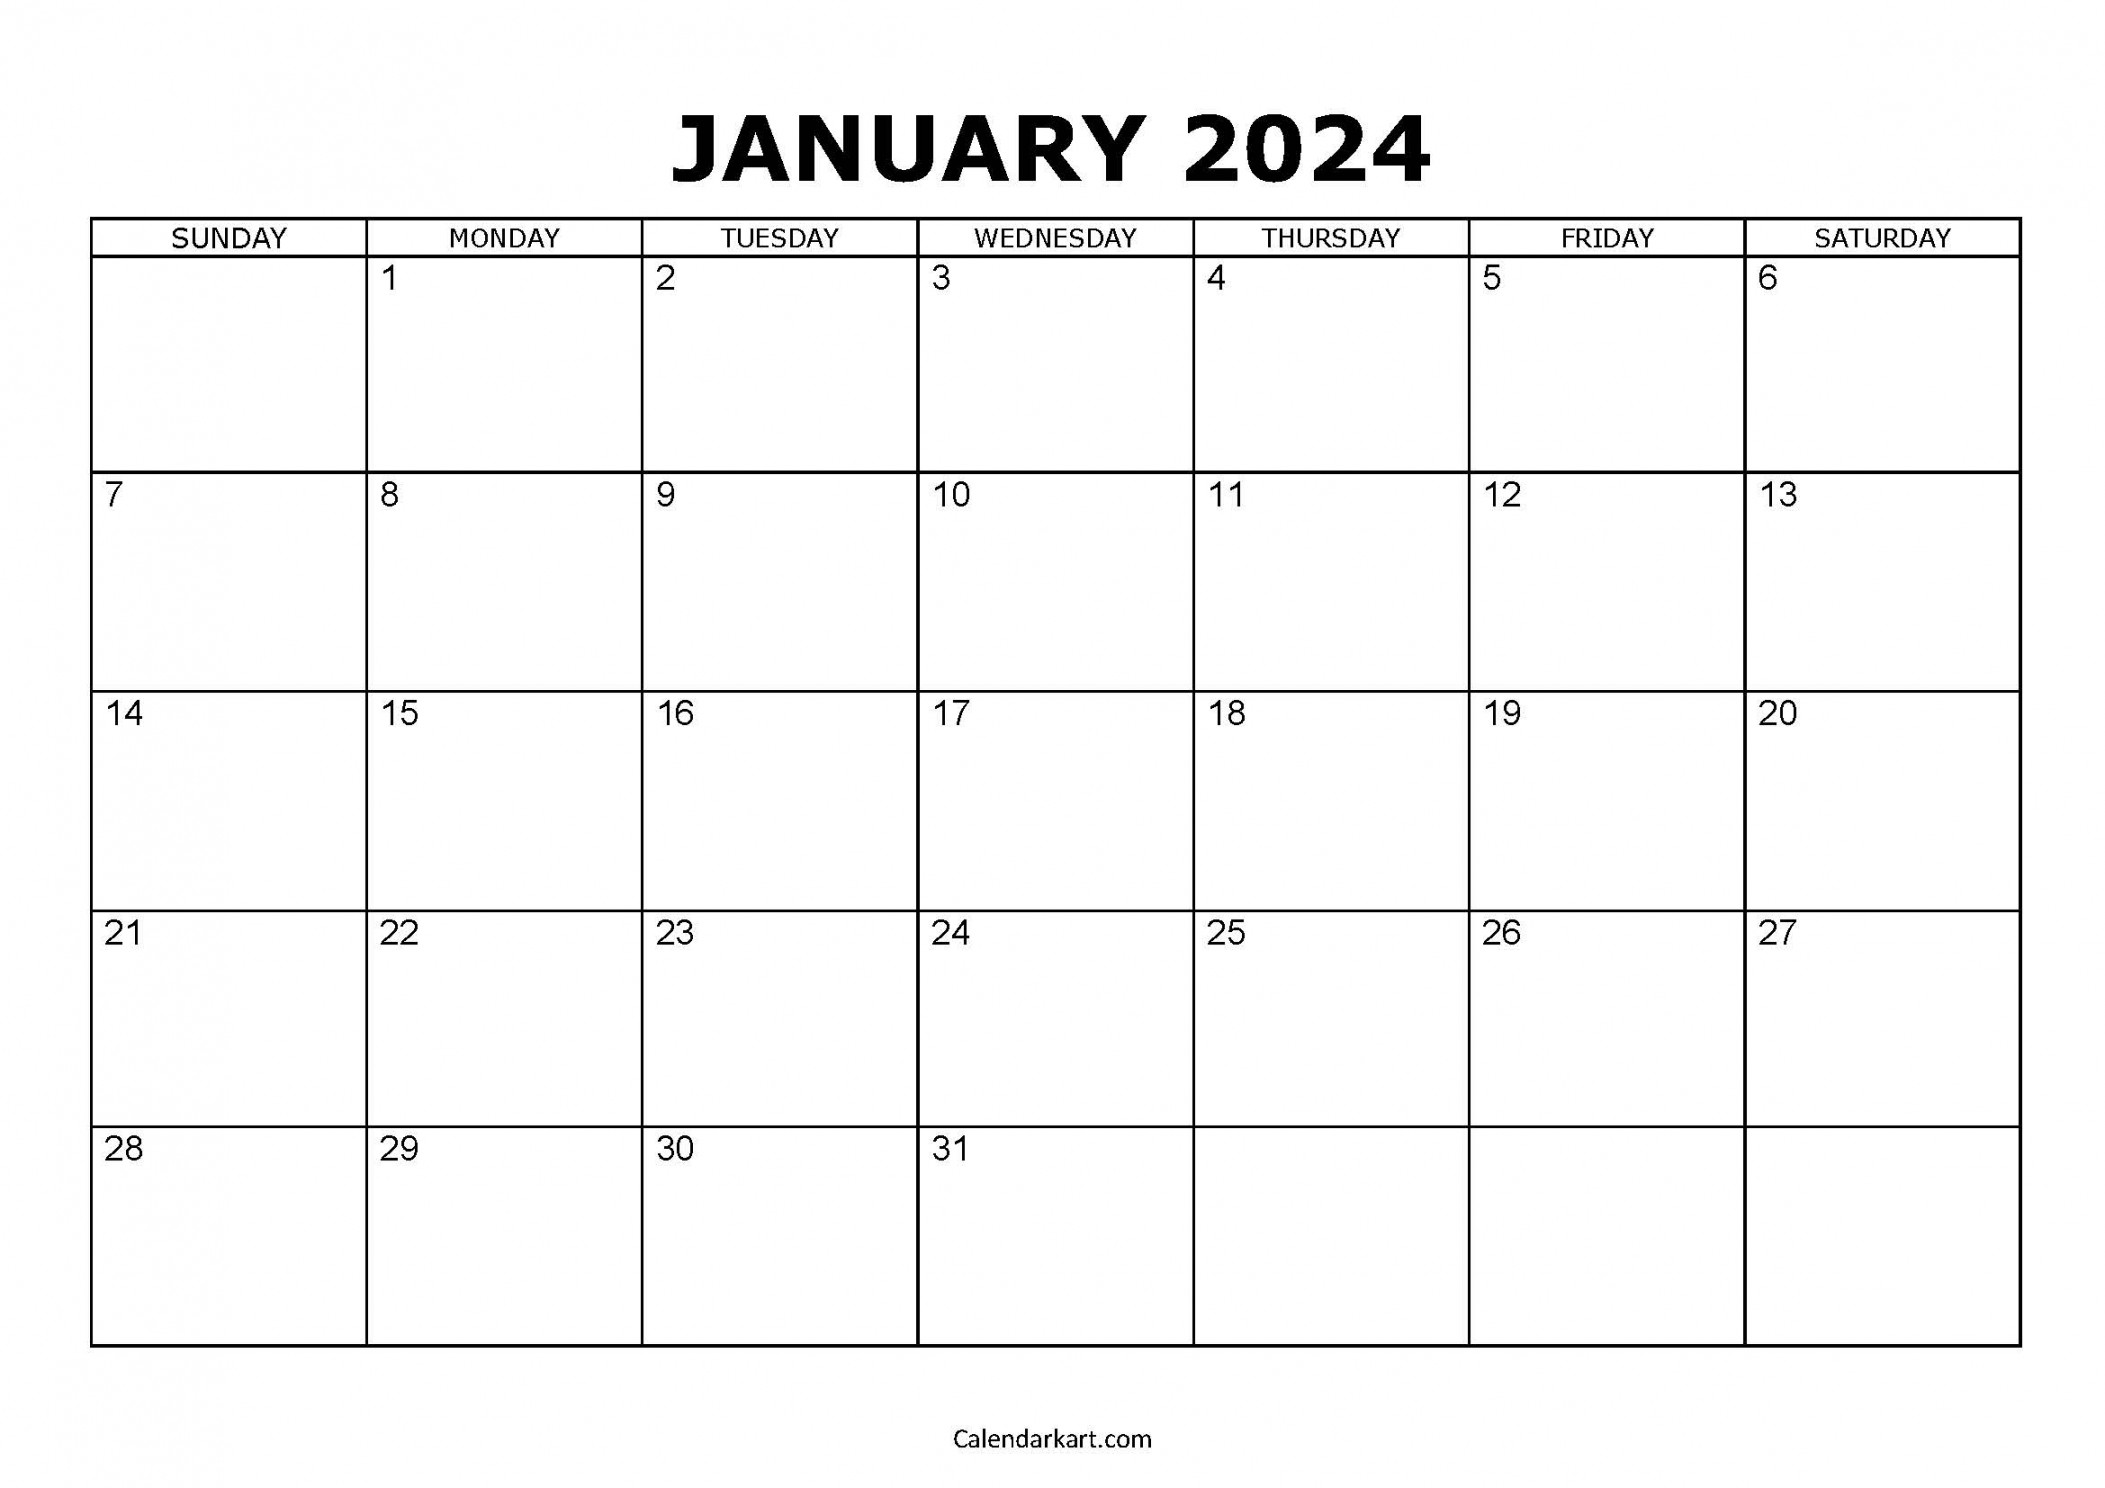 Free Printable January Calendars CalendarKart